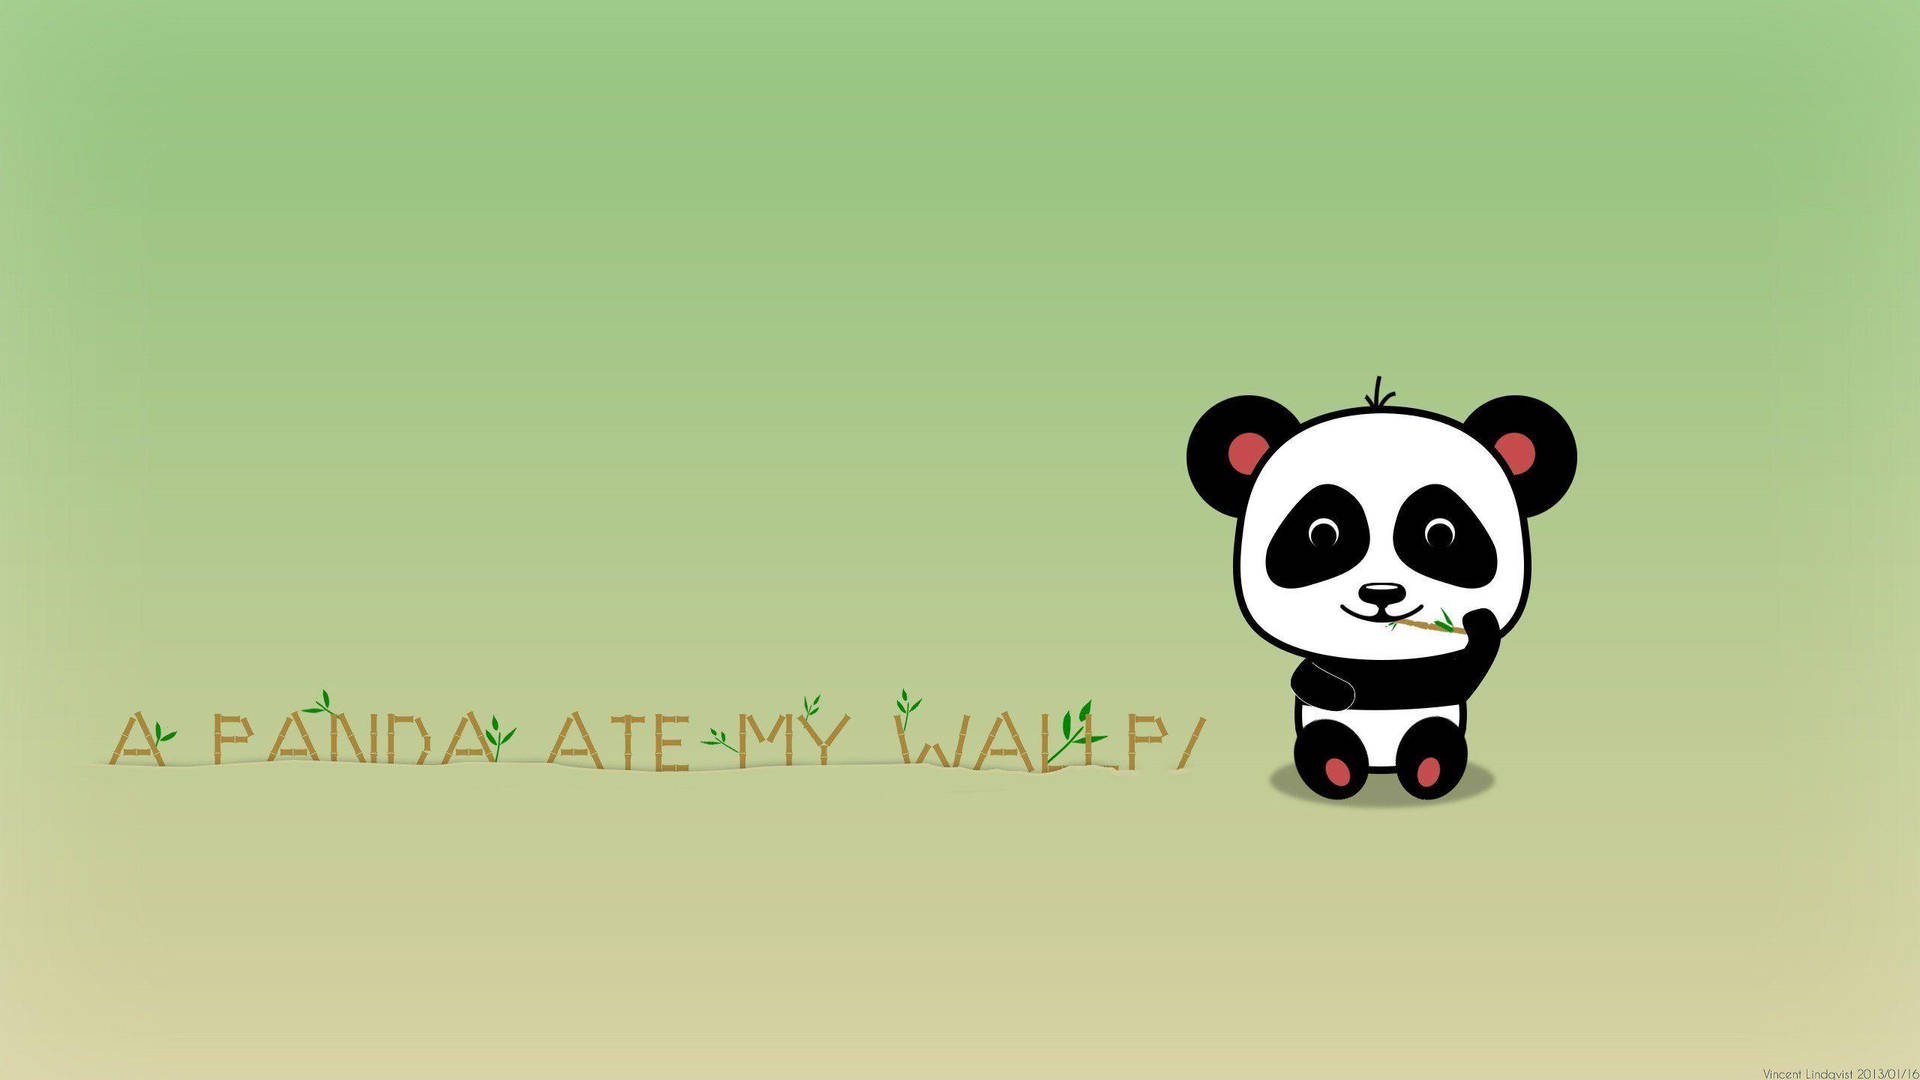 Top 999+ Aesthetic Panda Wallpapers Full HD, 4K✅Free to Use